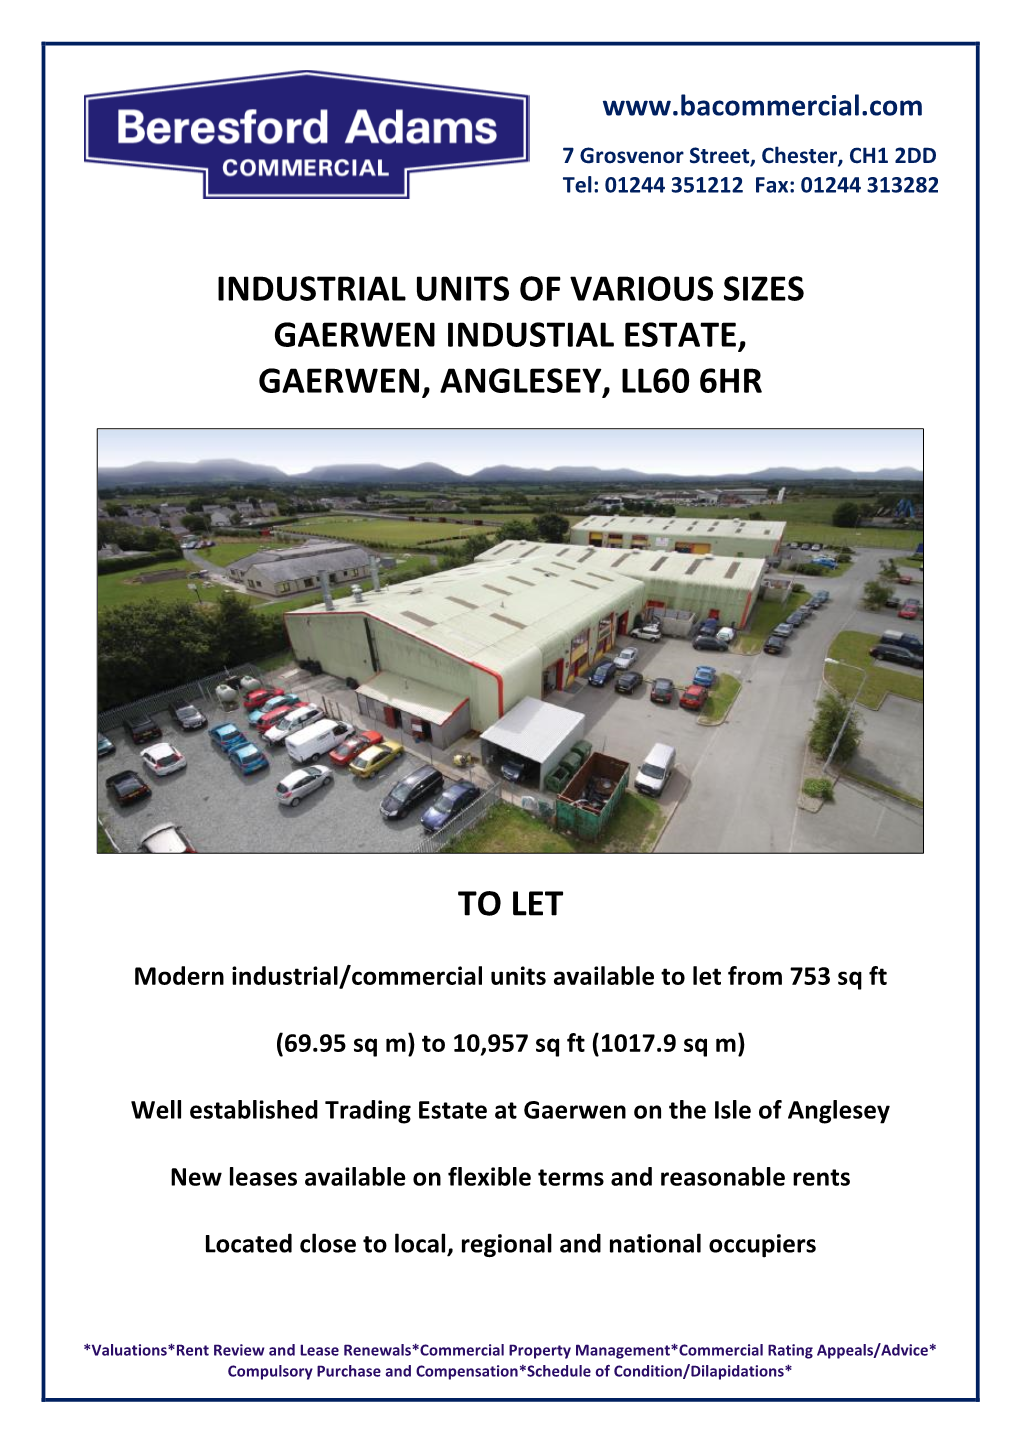 Industrial Units of Various Sizes Gaerwen Industial Estate, Gaerwen, Anglesey, Ll60 6Hr